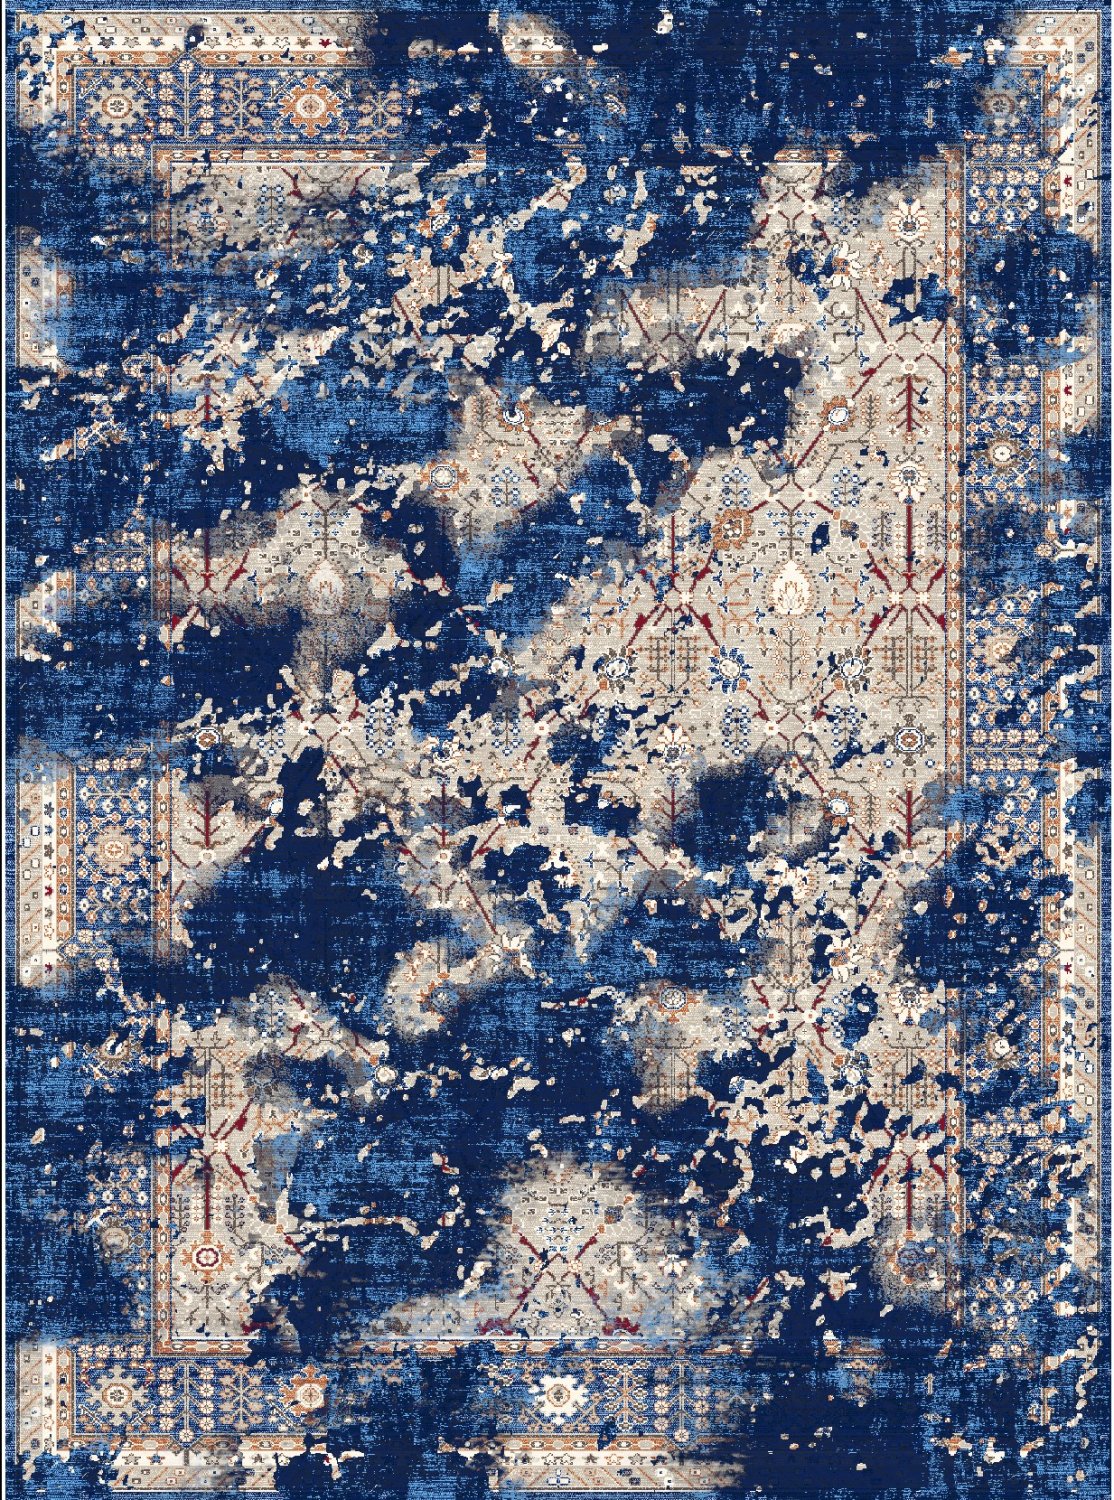 Wilton rug - Temima (blue)